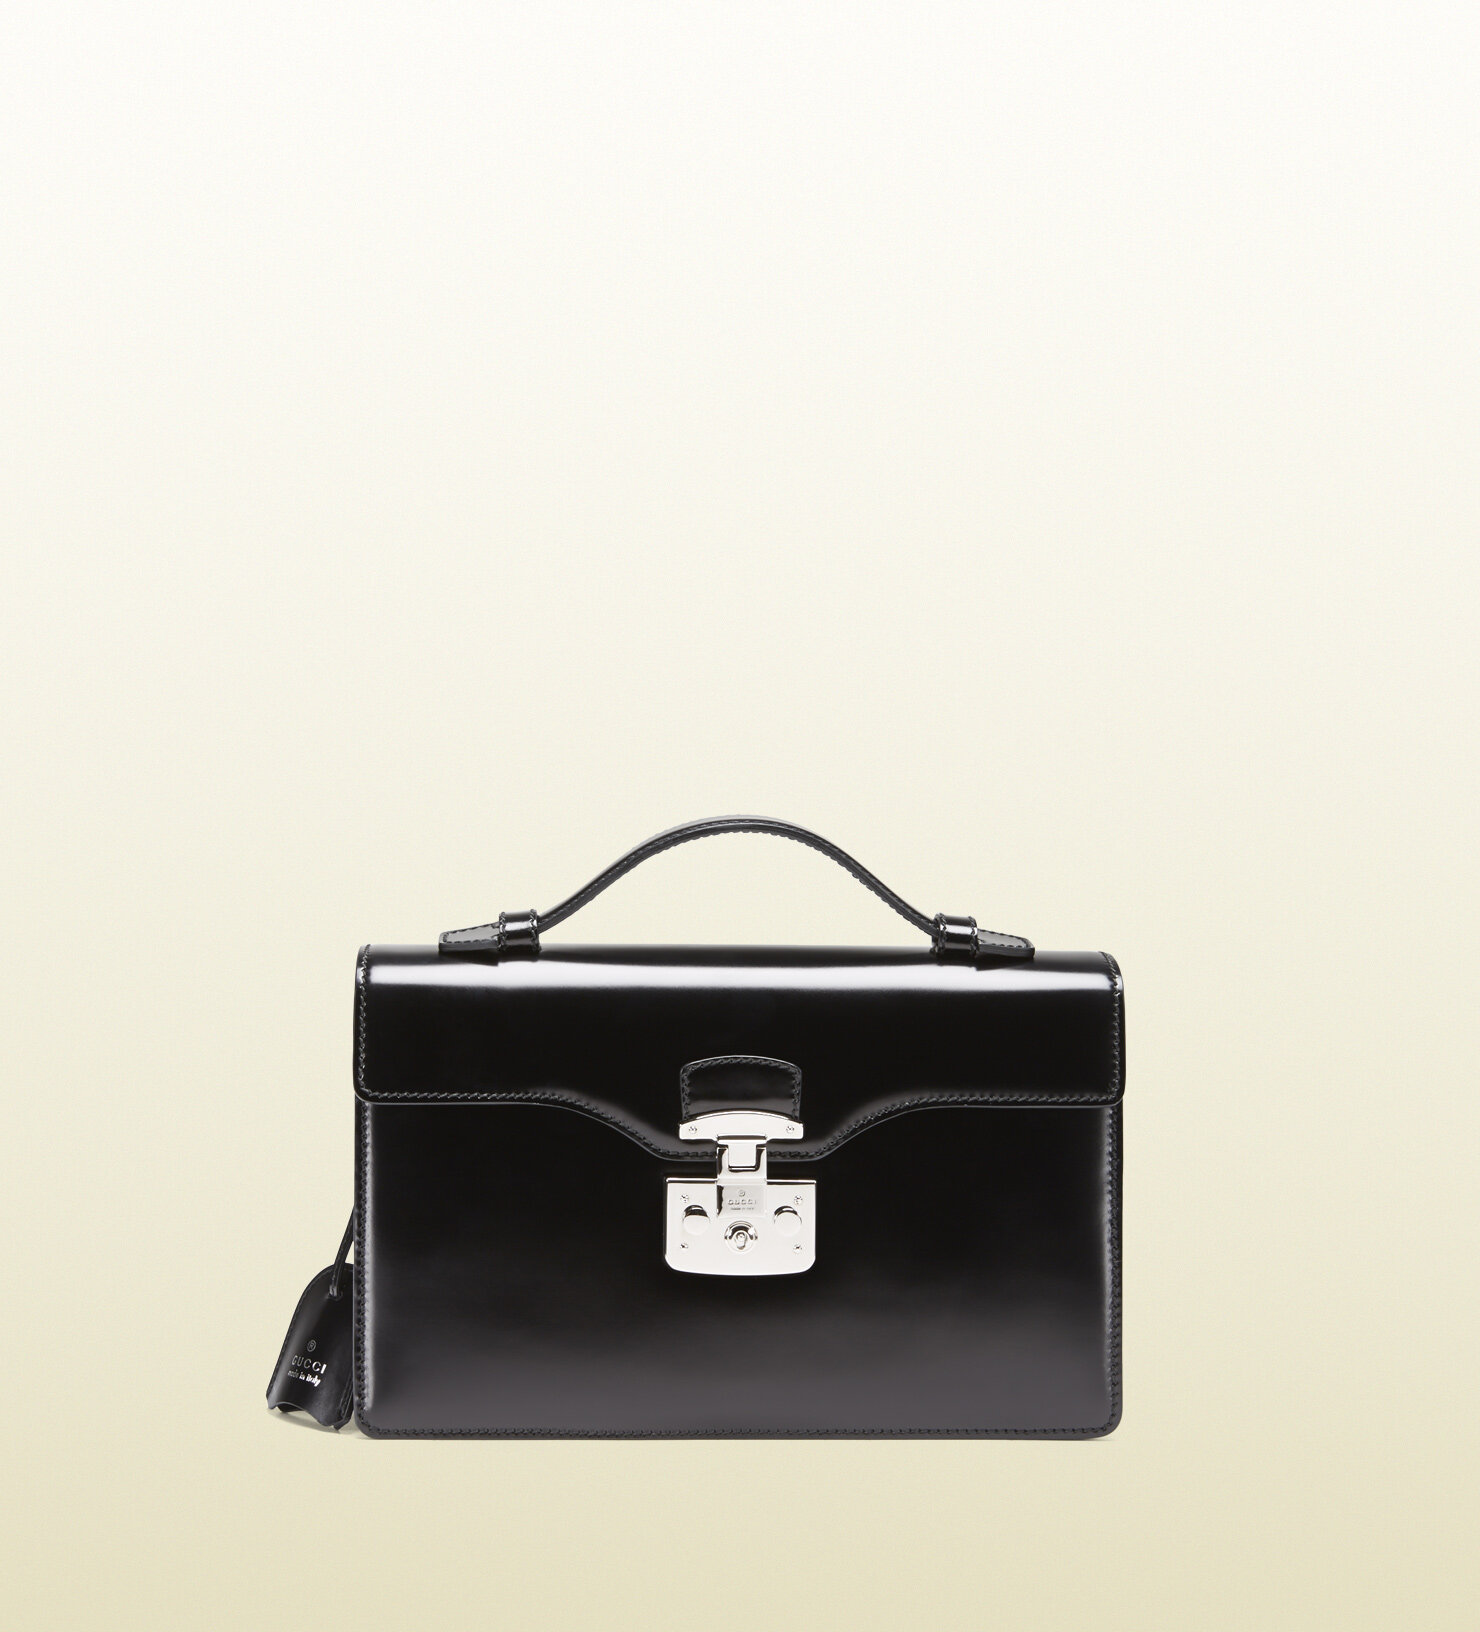 Gucci Lady Lock Leather Briefcase Clutch in Black.jpg